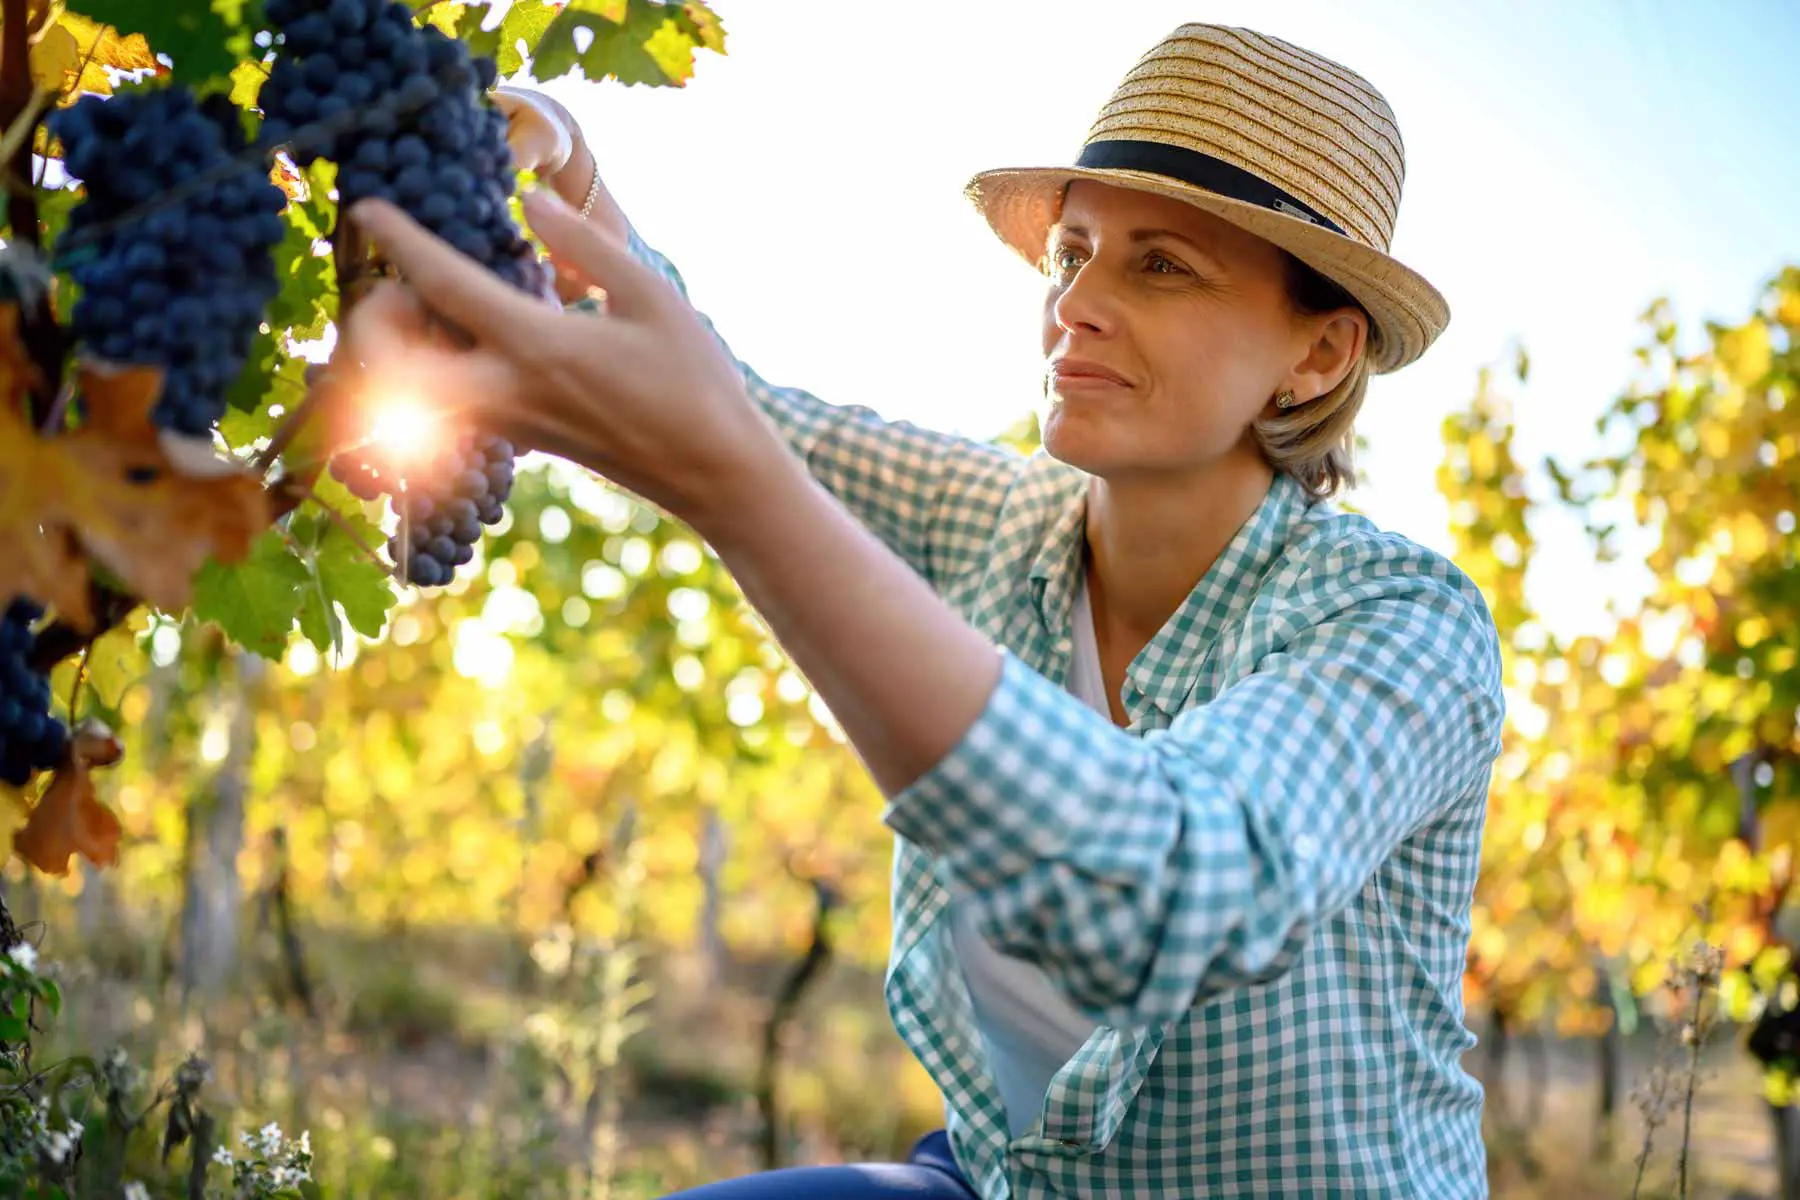 Smiling vintner examining grapes in vineyard